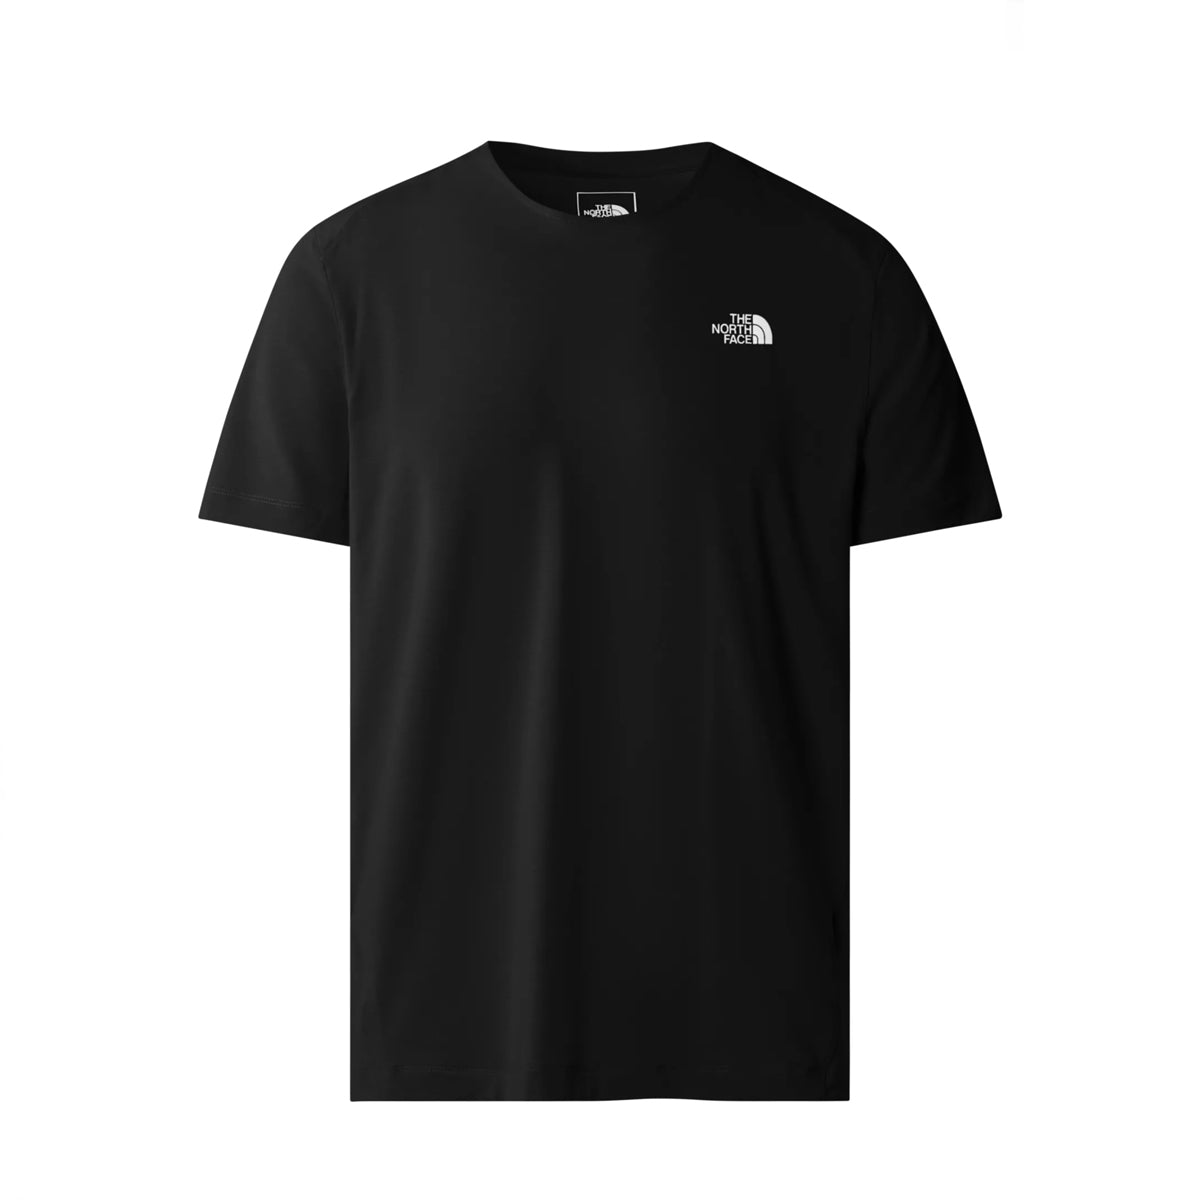 The North Face - T-shirt Lightning Alpine TNF Black - NF0A87H7 - TNF/BLACK